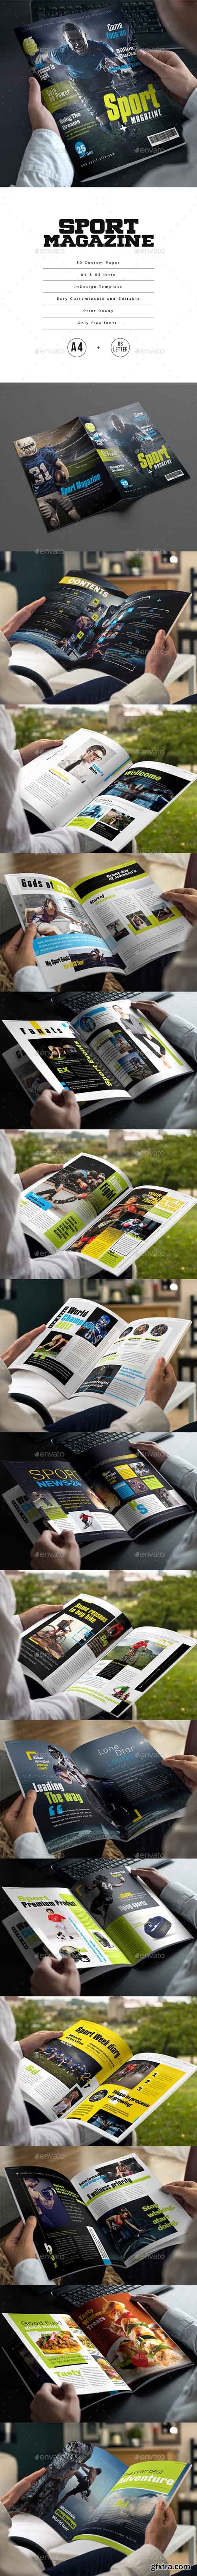 Sport Magazine 21376536